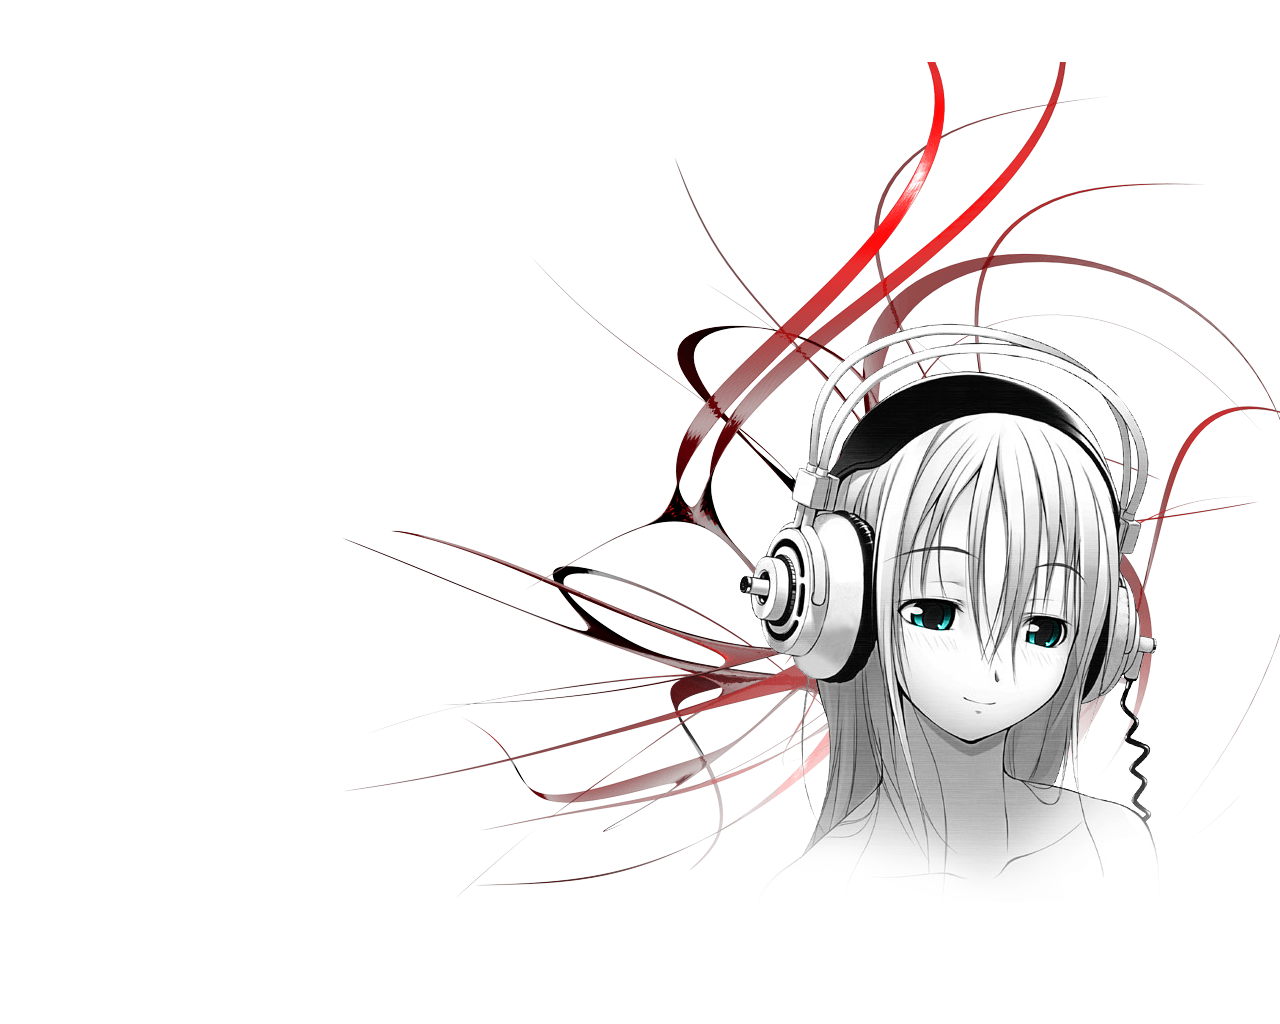 anime music